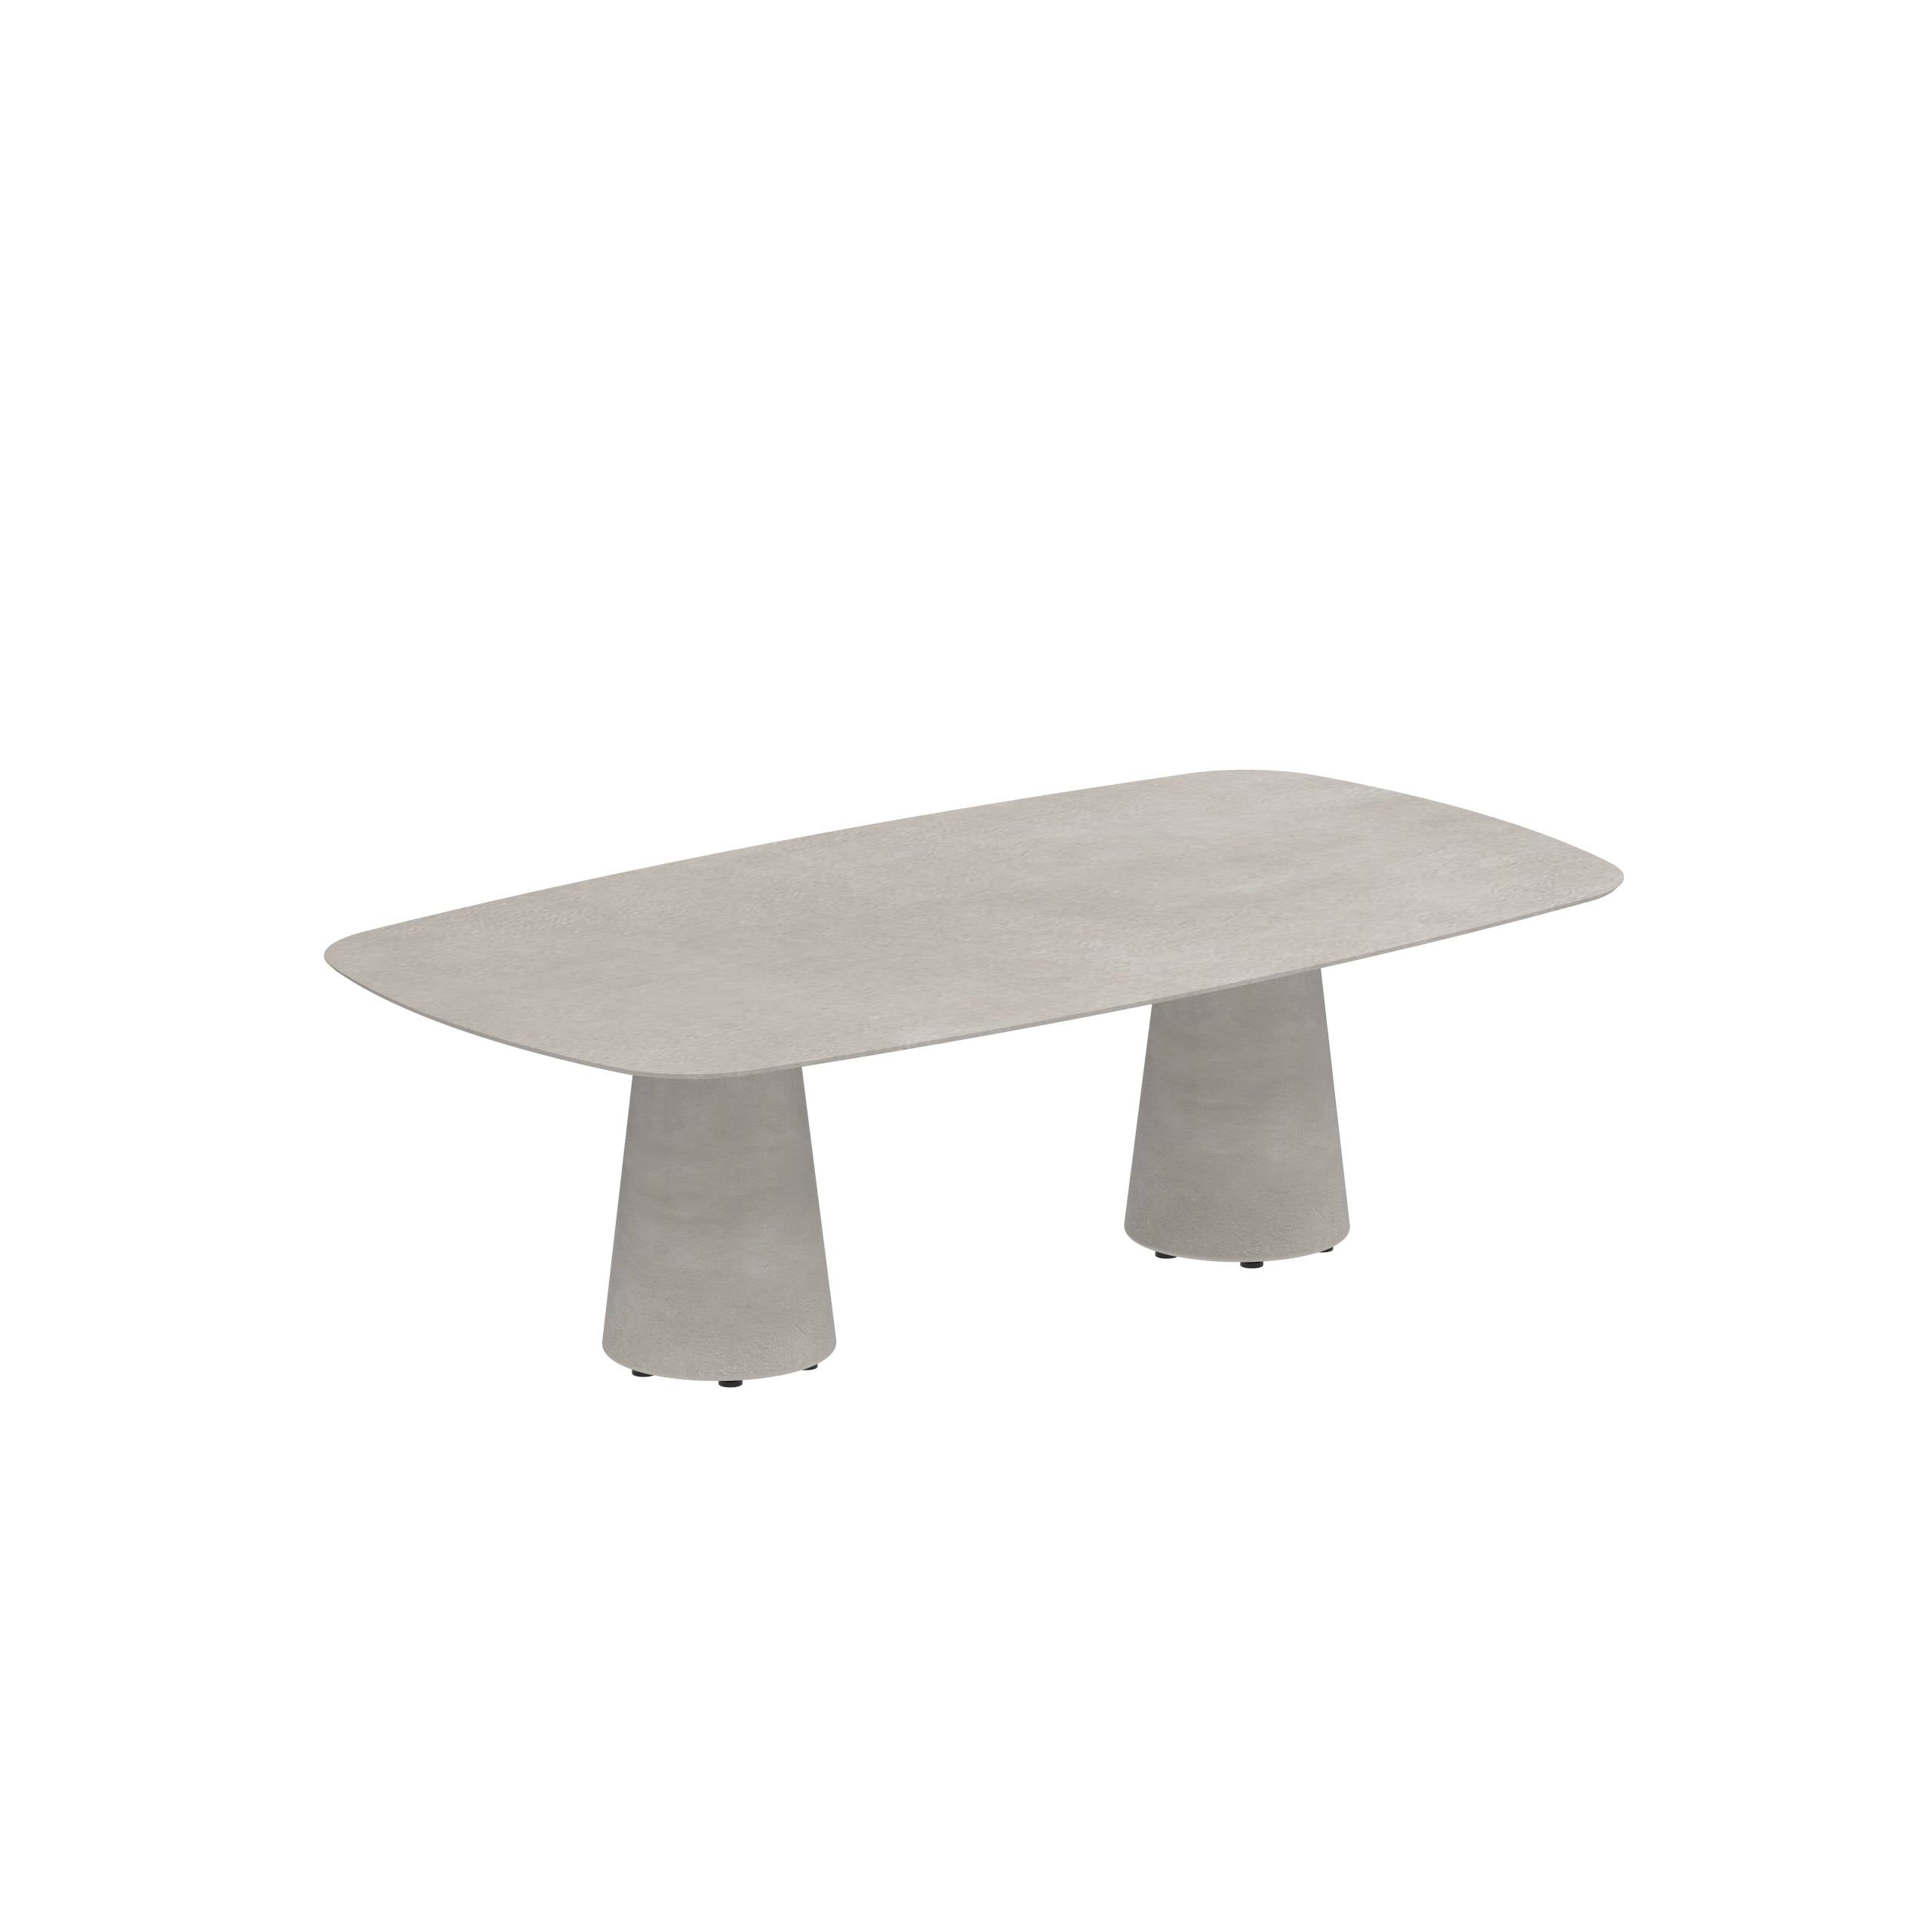 Conix Table 220x120 Cm Low Dining Legs Concrete Cement Grey - Table Top Ceramic Cemento Luminoso